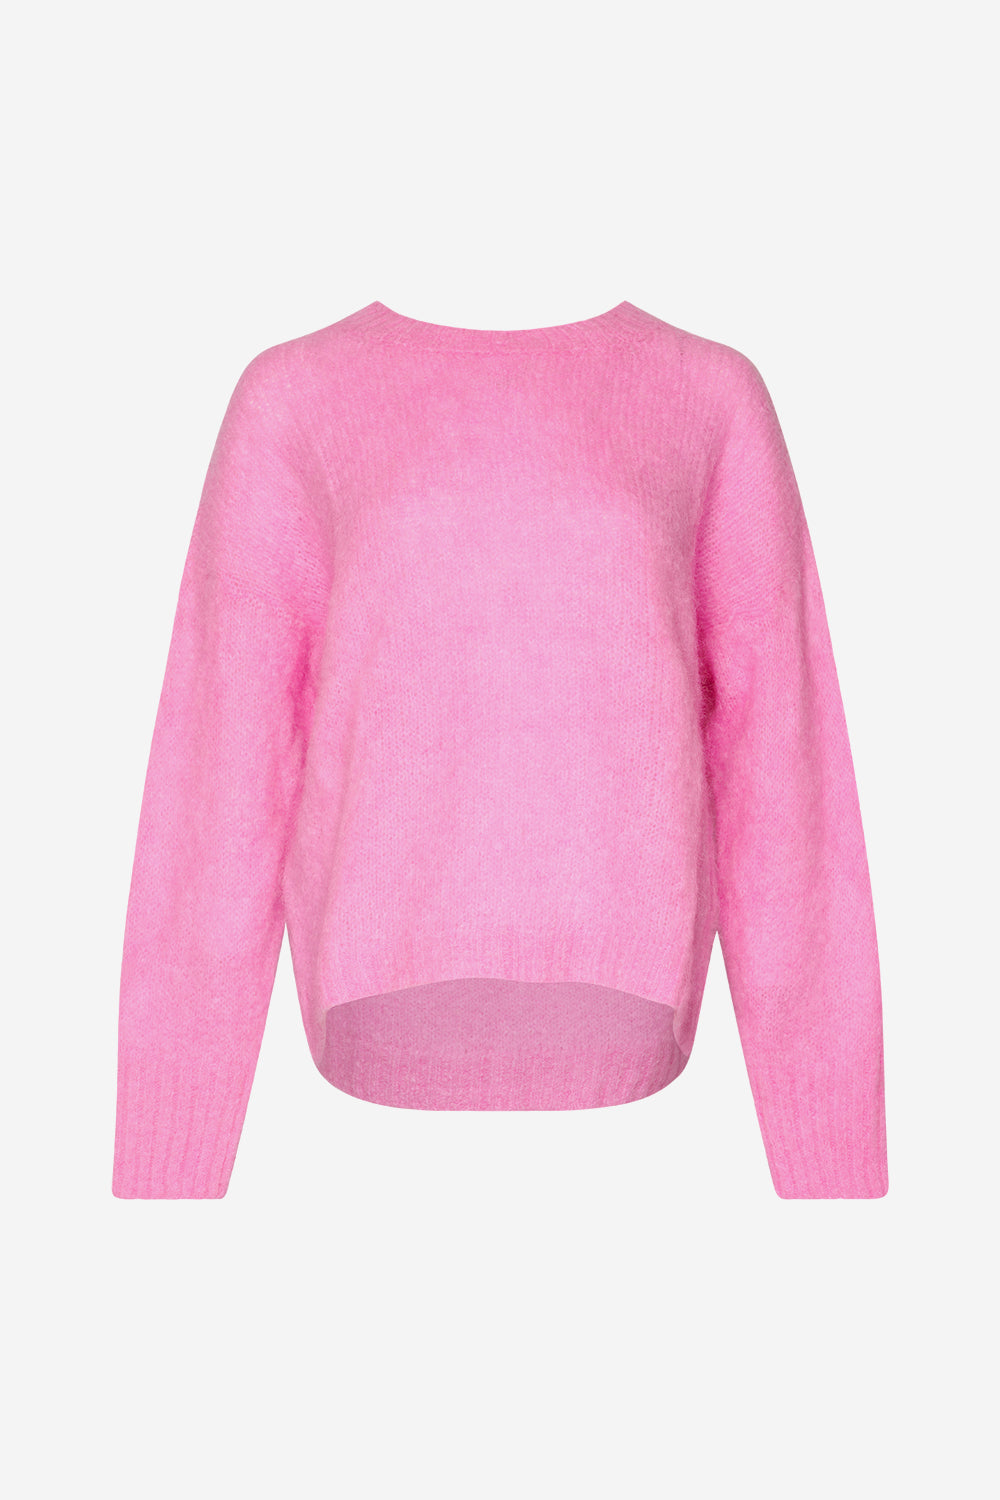 Belinda Sweater Pink